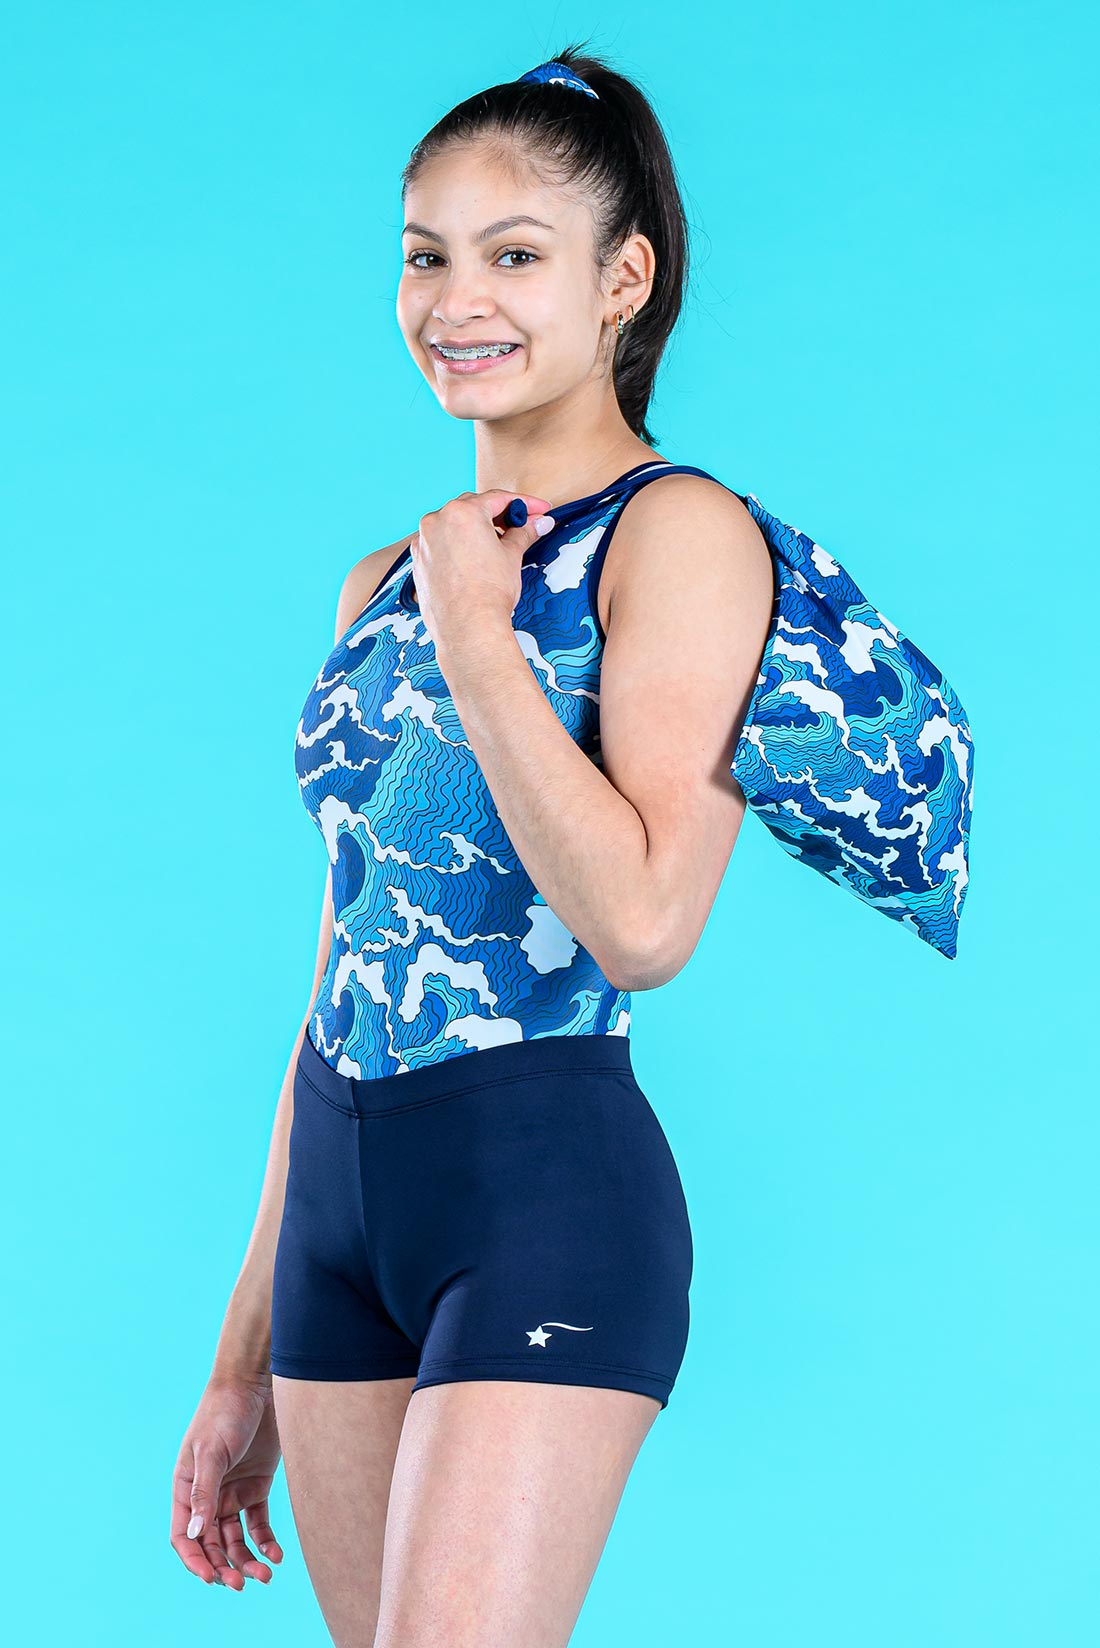 Blue gymnastics outfit with compression shorts, Destira, 2023